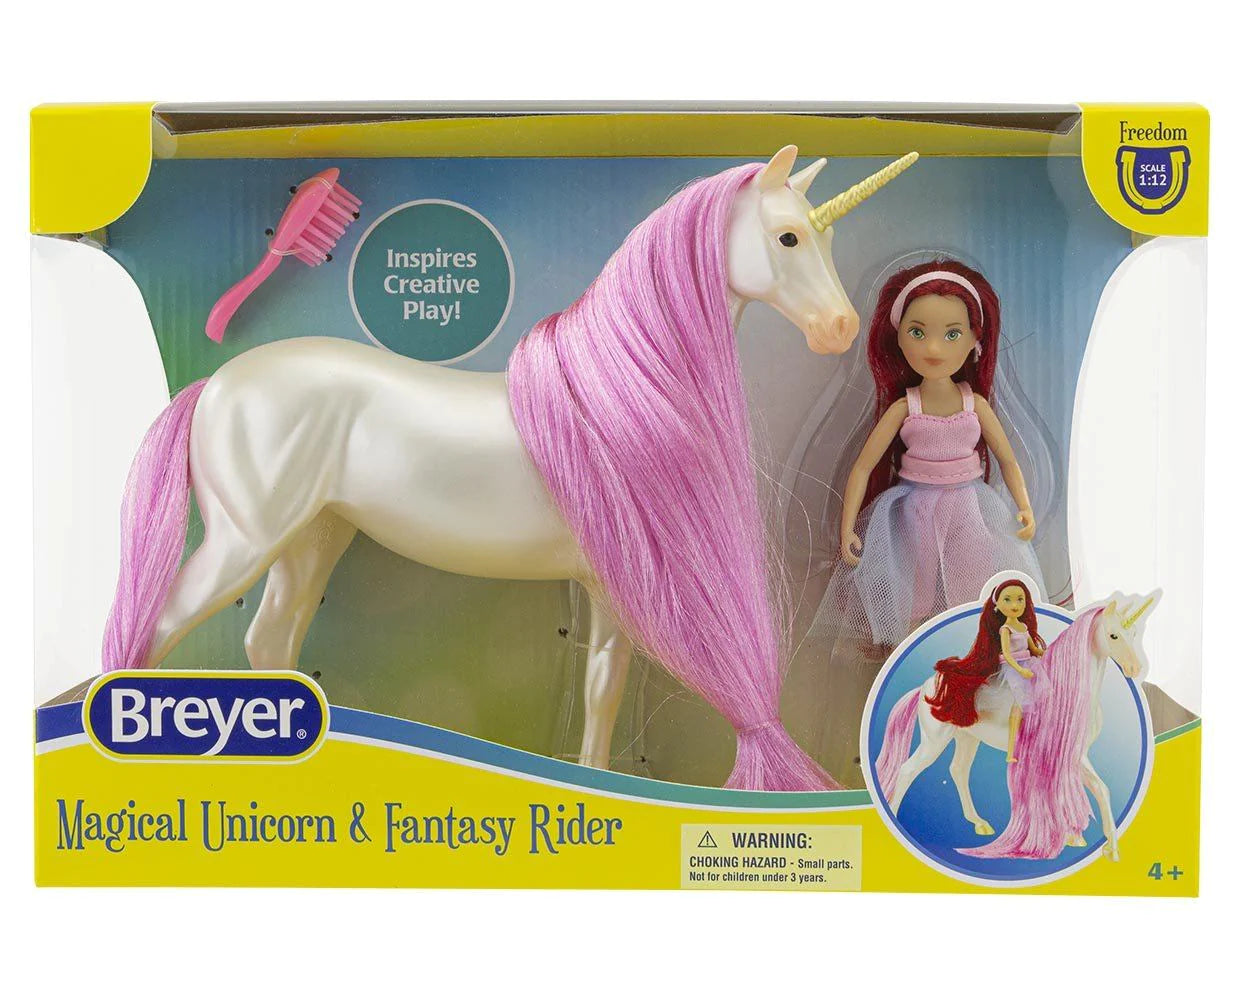 Breyer Freedom Magical Unicorn Sky and Fantasy Rider Meadow